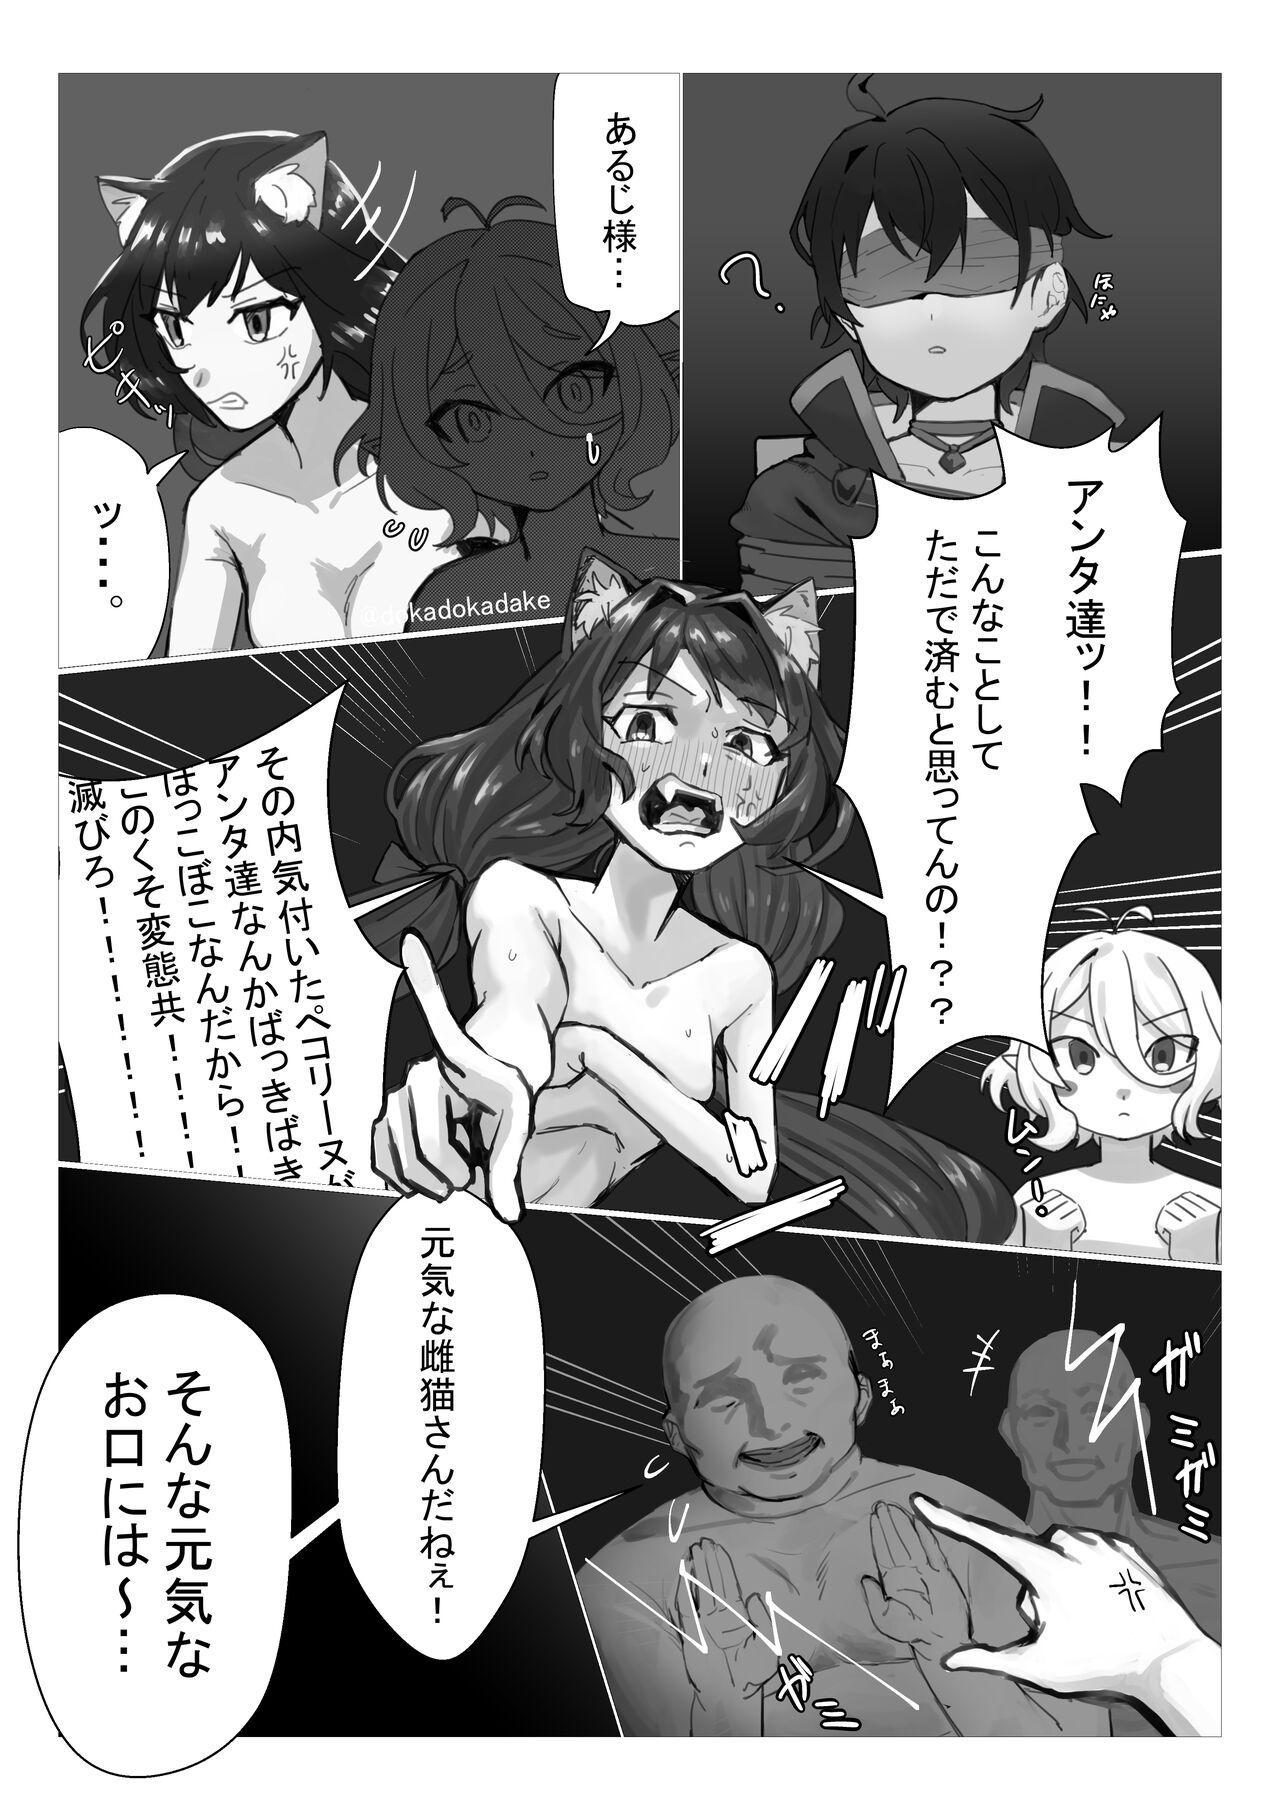 Newbie プリコネ輪姦NTR漫画 - Princess connect Pussy Play - Page 2